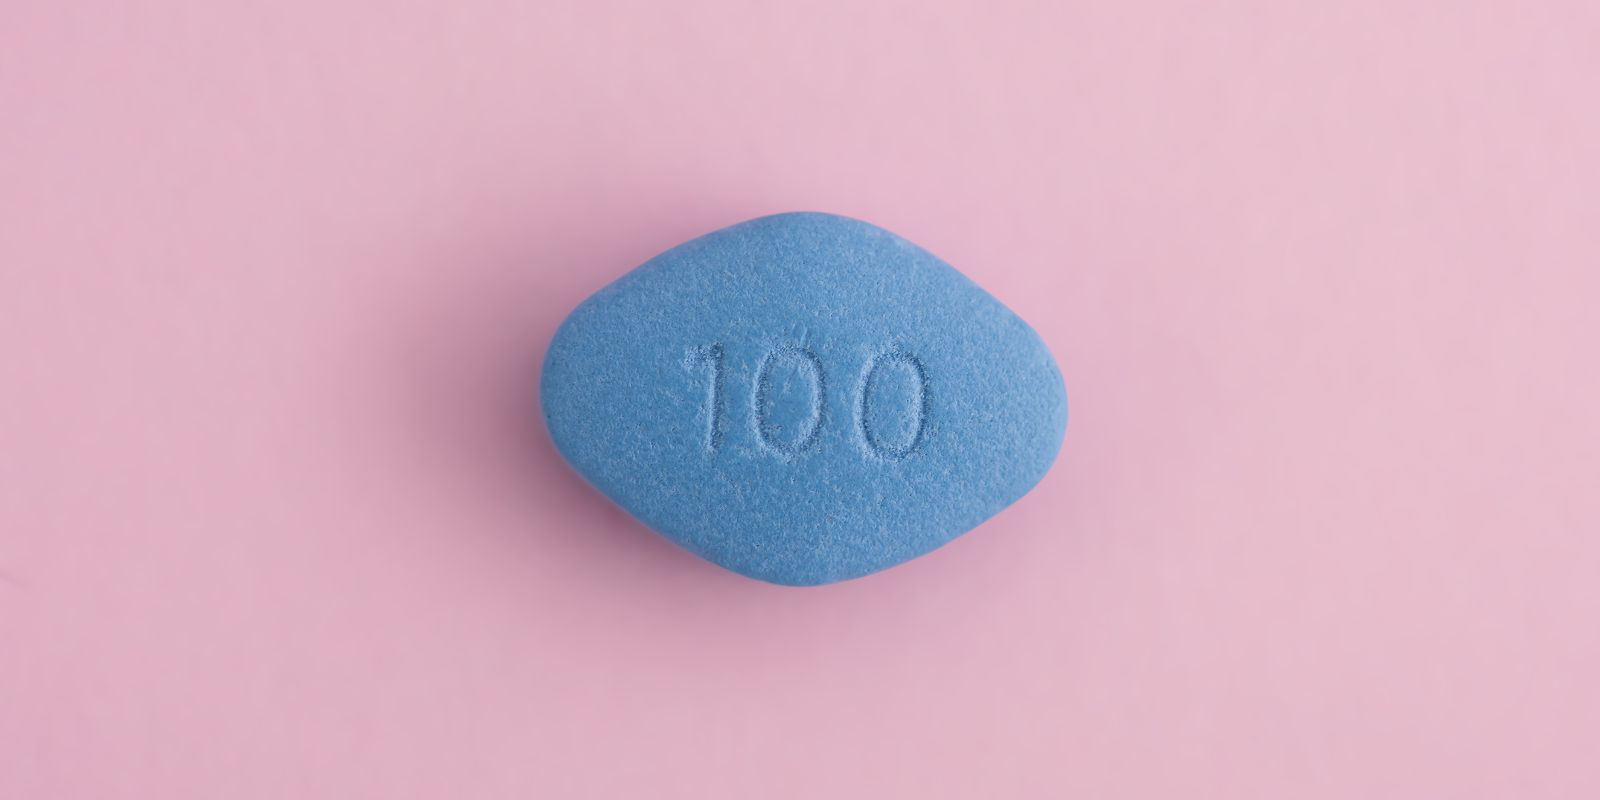 March 27th: FDA Approved Pfizer’s New Pill, Viagra